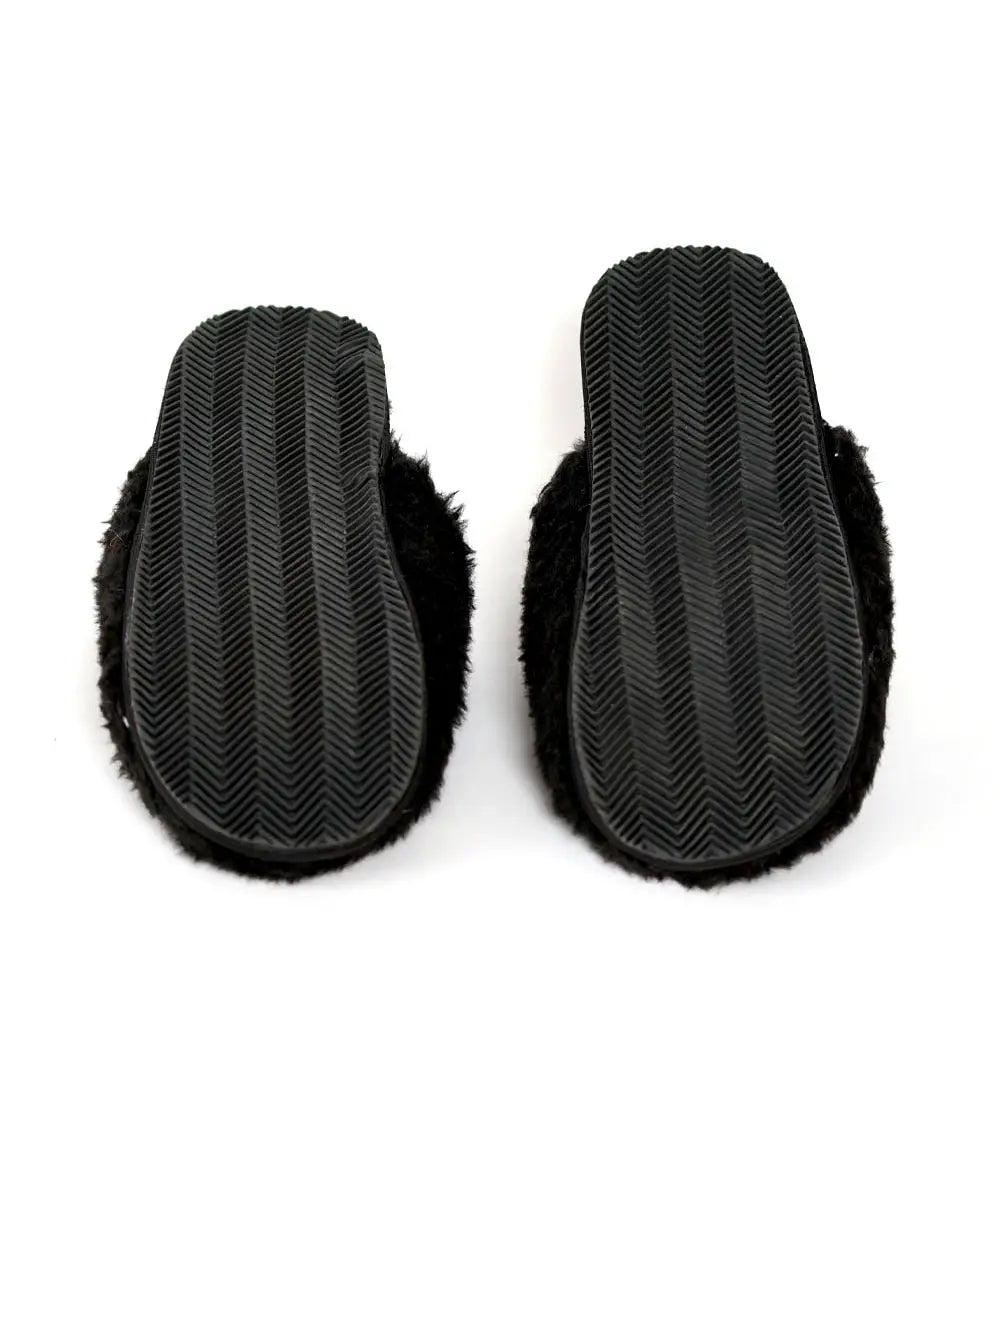 Comfy black slippers